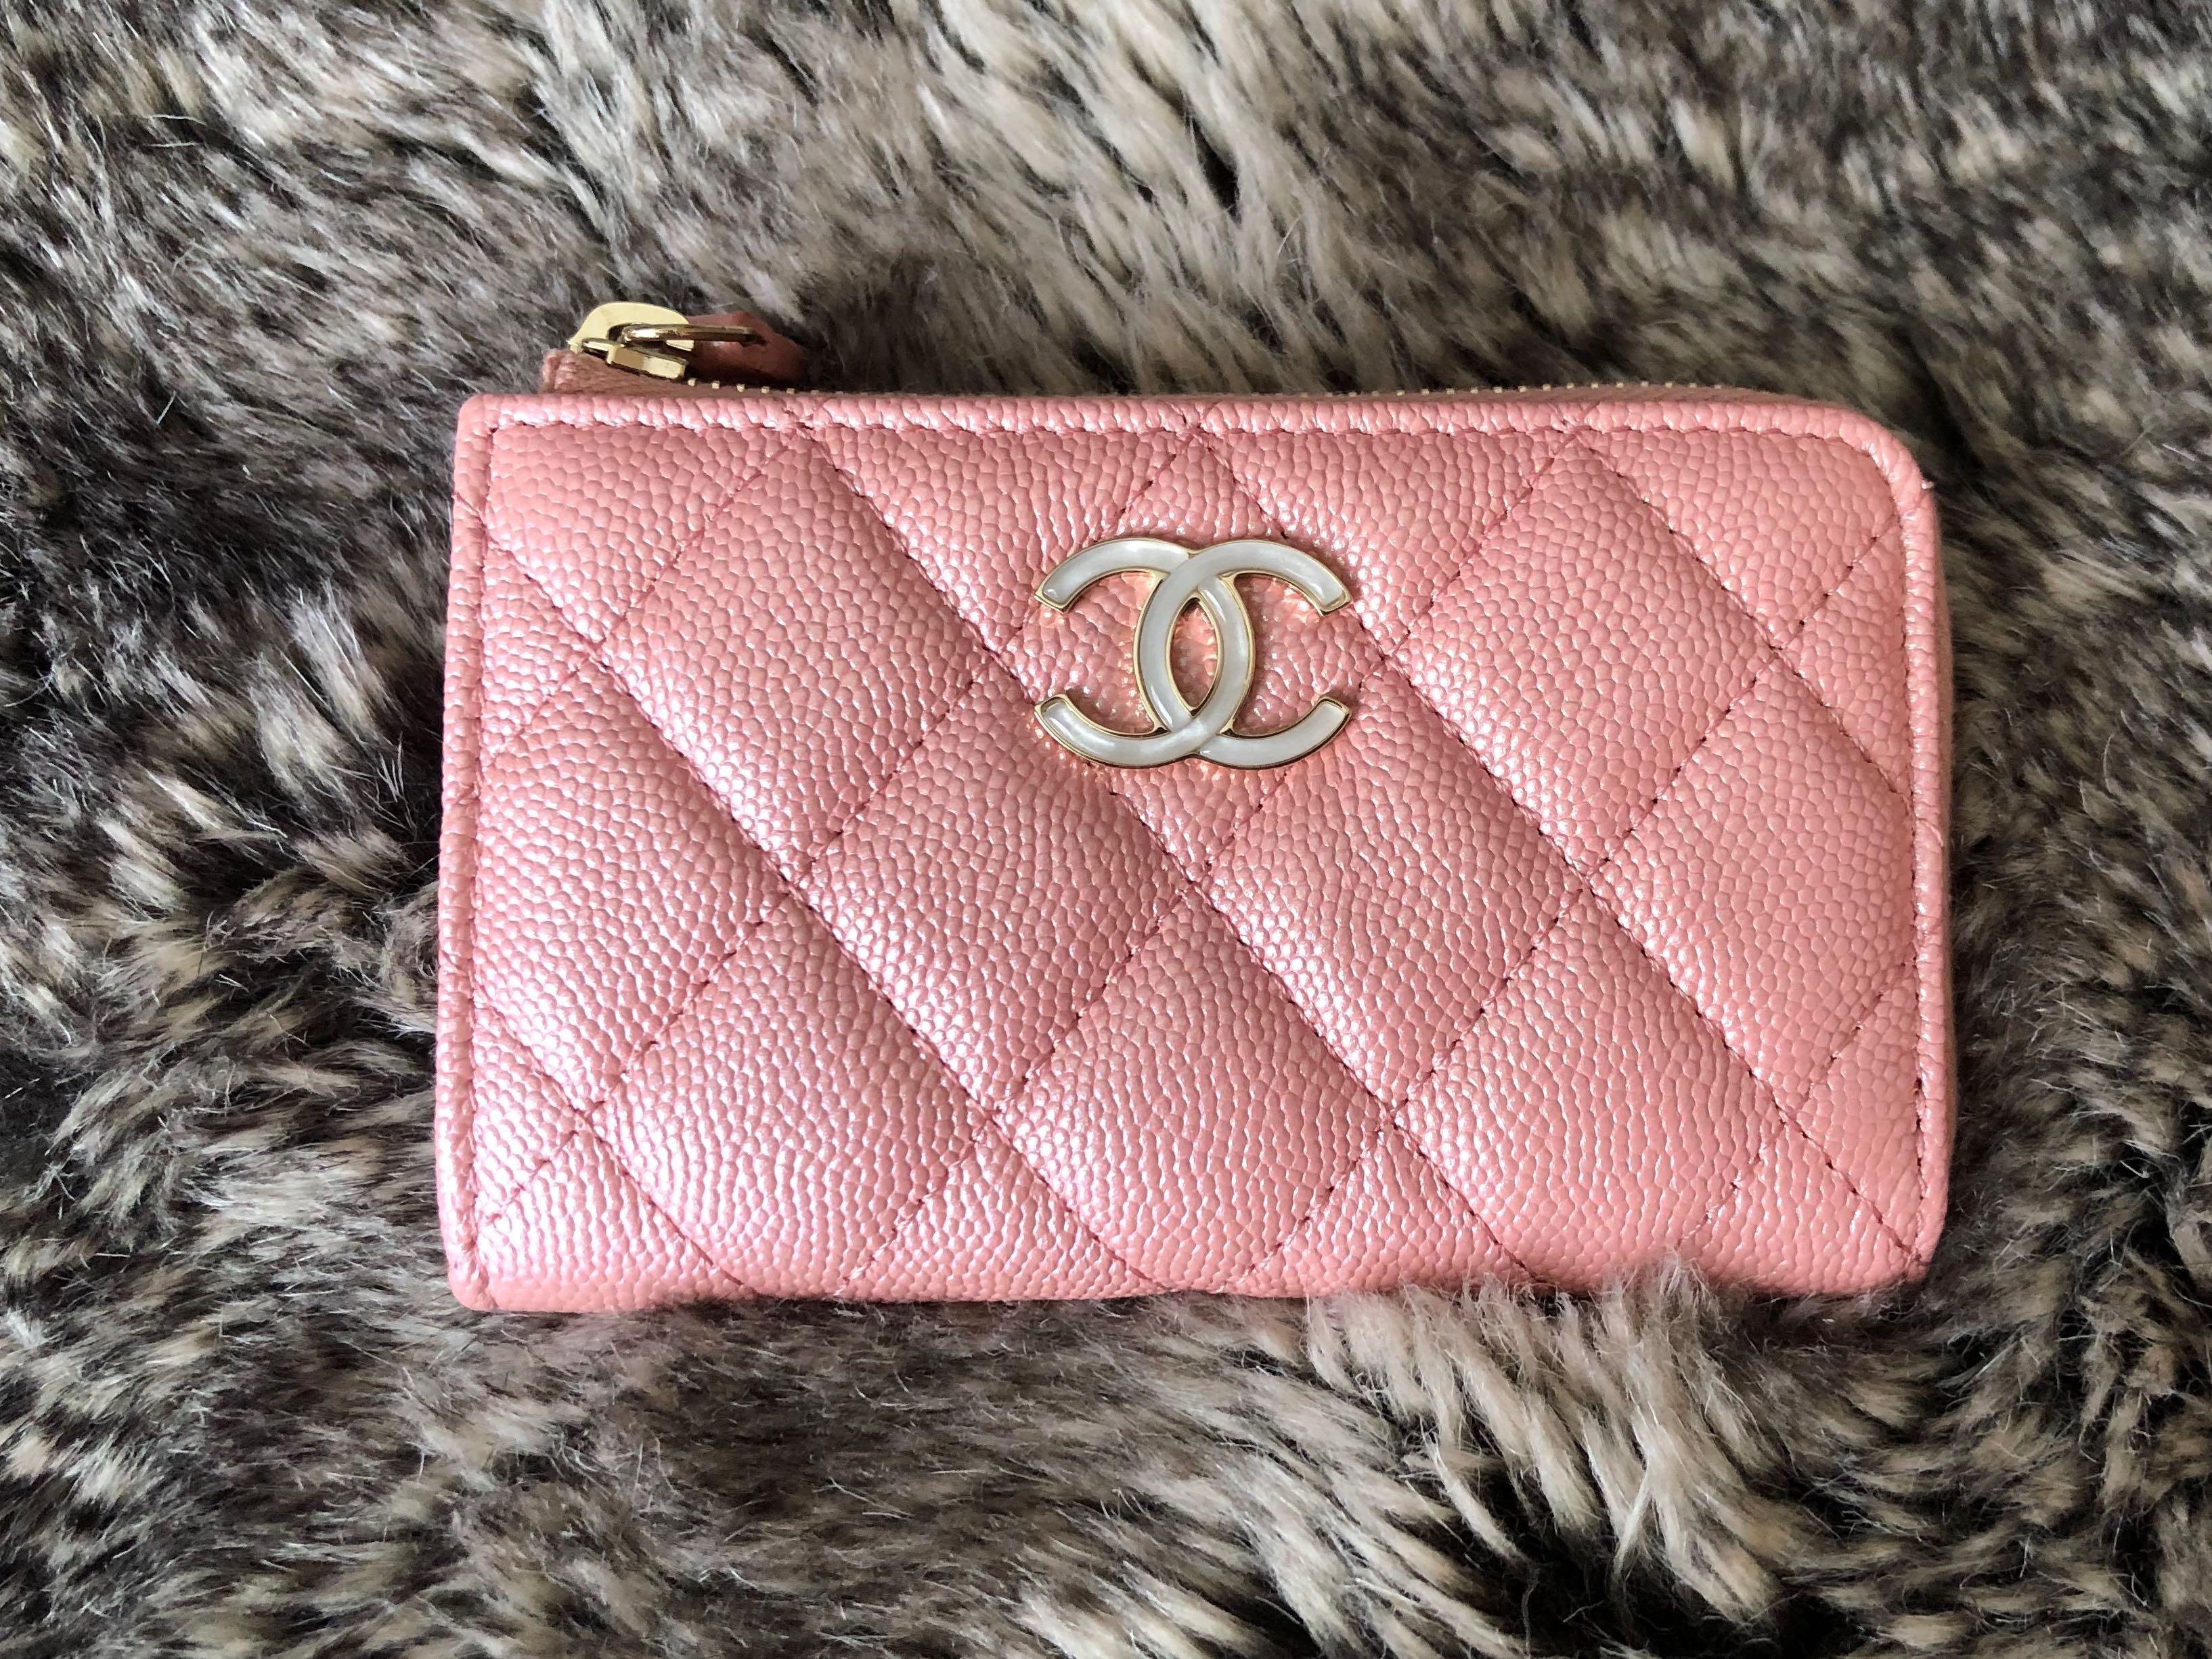 Chanel Pink Translucent Filigree Round Clutch w/ Chain Crossbody Bag  289ca513